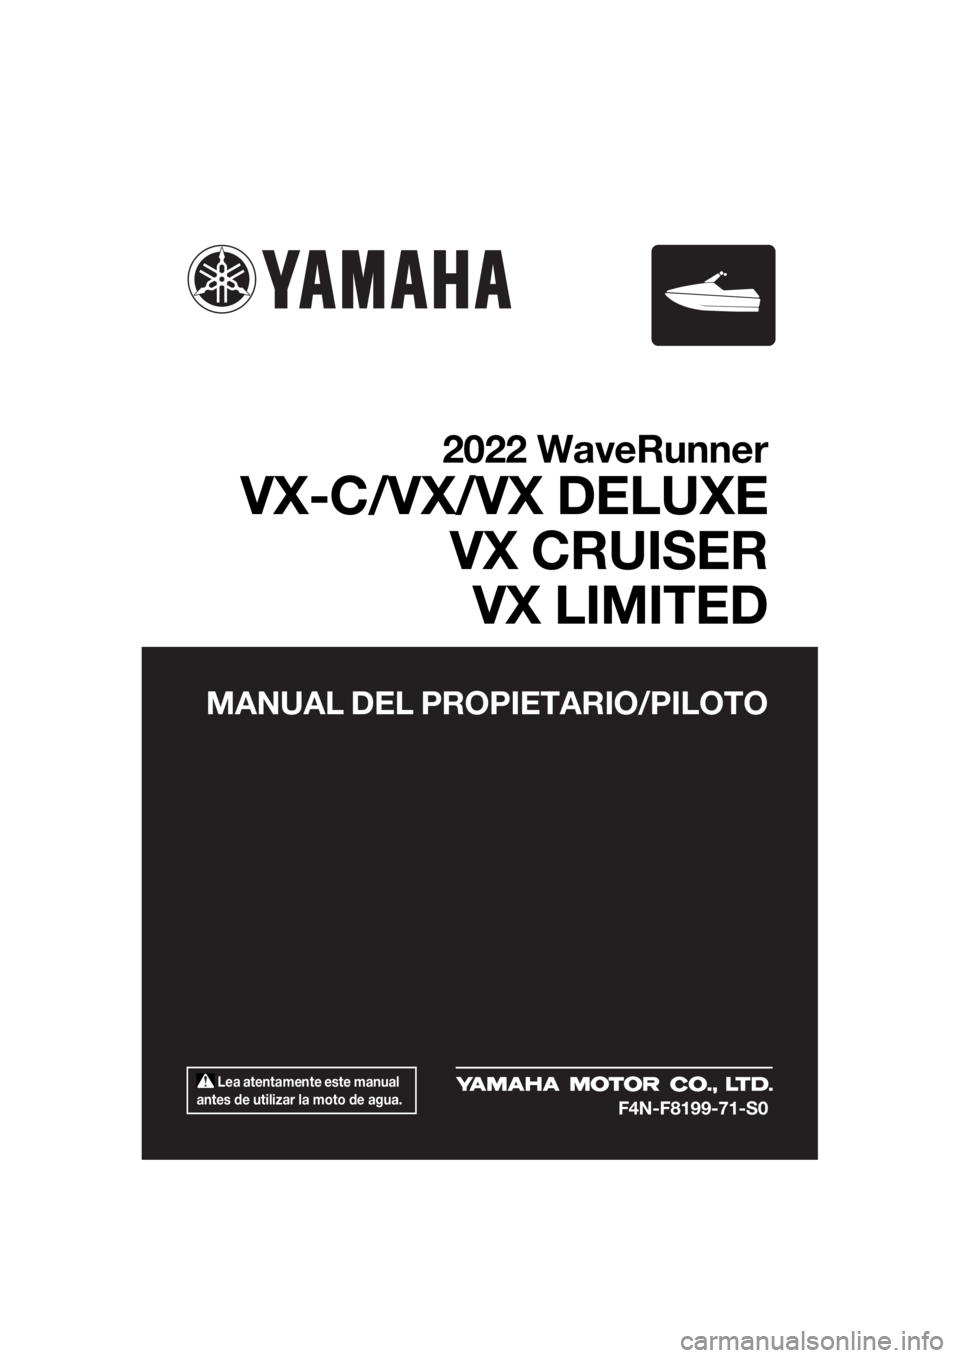 YAMAHA VX CRUISER 2022  Manuale de Empleo (in Spanish)  Lea atentamente este manual 
antes de utilizar la moto de agua.
MANUAL DEL PROPIETARIO/PILOTO
2022 WaveRunner
VX-C/VX/VX DELUXE VX CRUISERVX LIMITED
F4N-F8199-71-S0
UF4N71S0.book  Page 1  Thursday, A